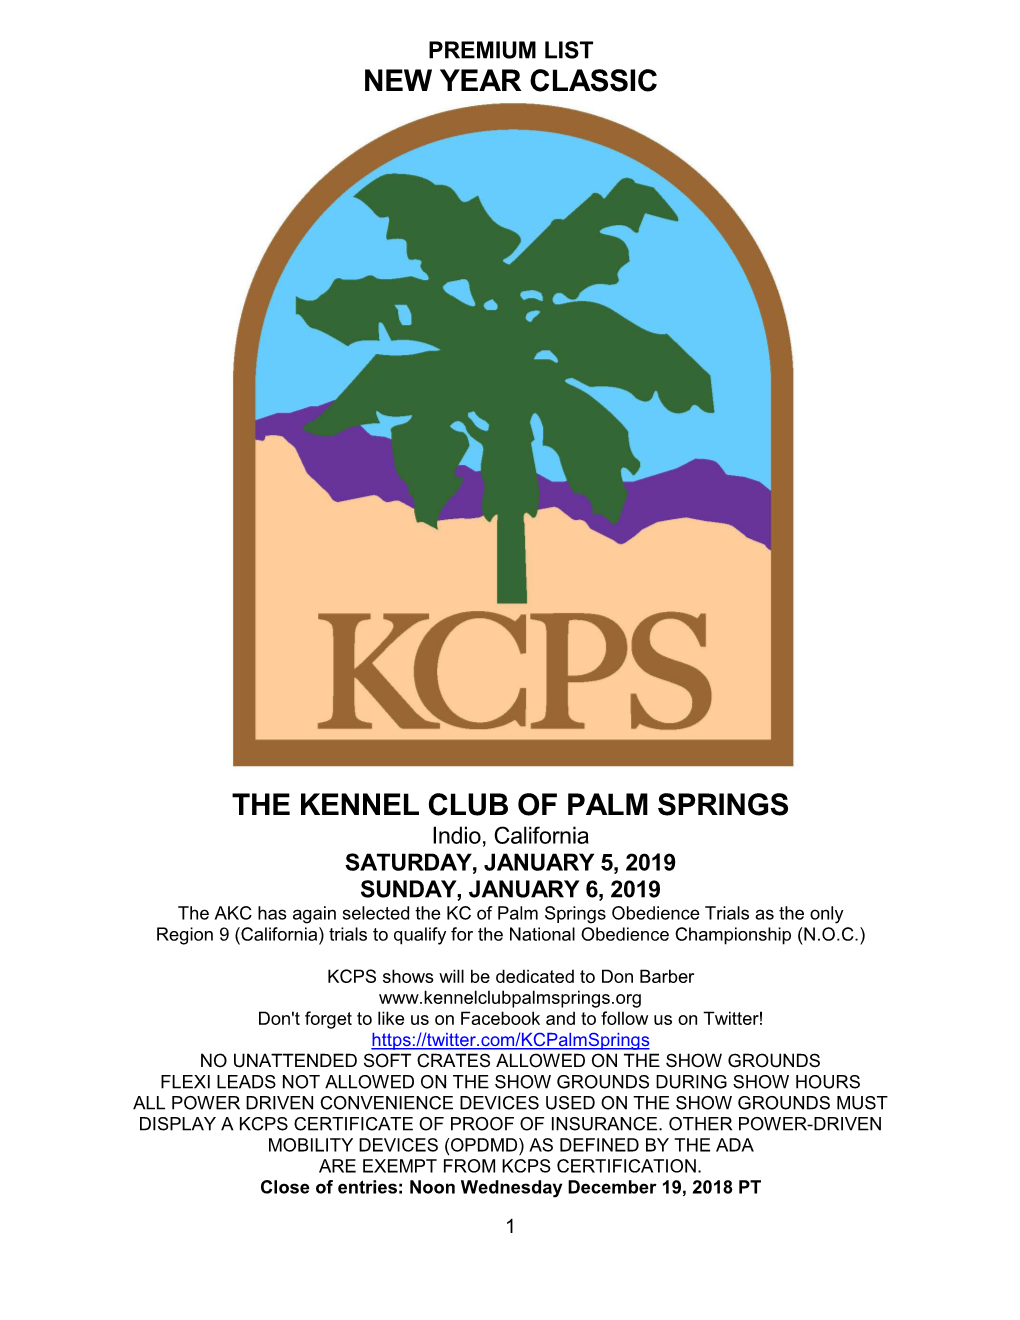 Kennel Club of Palm Springs Premium List